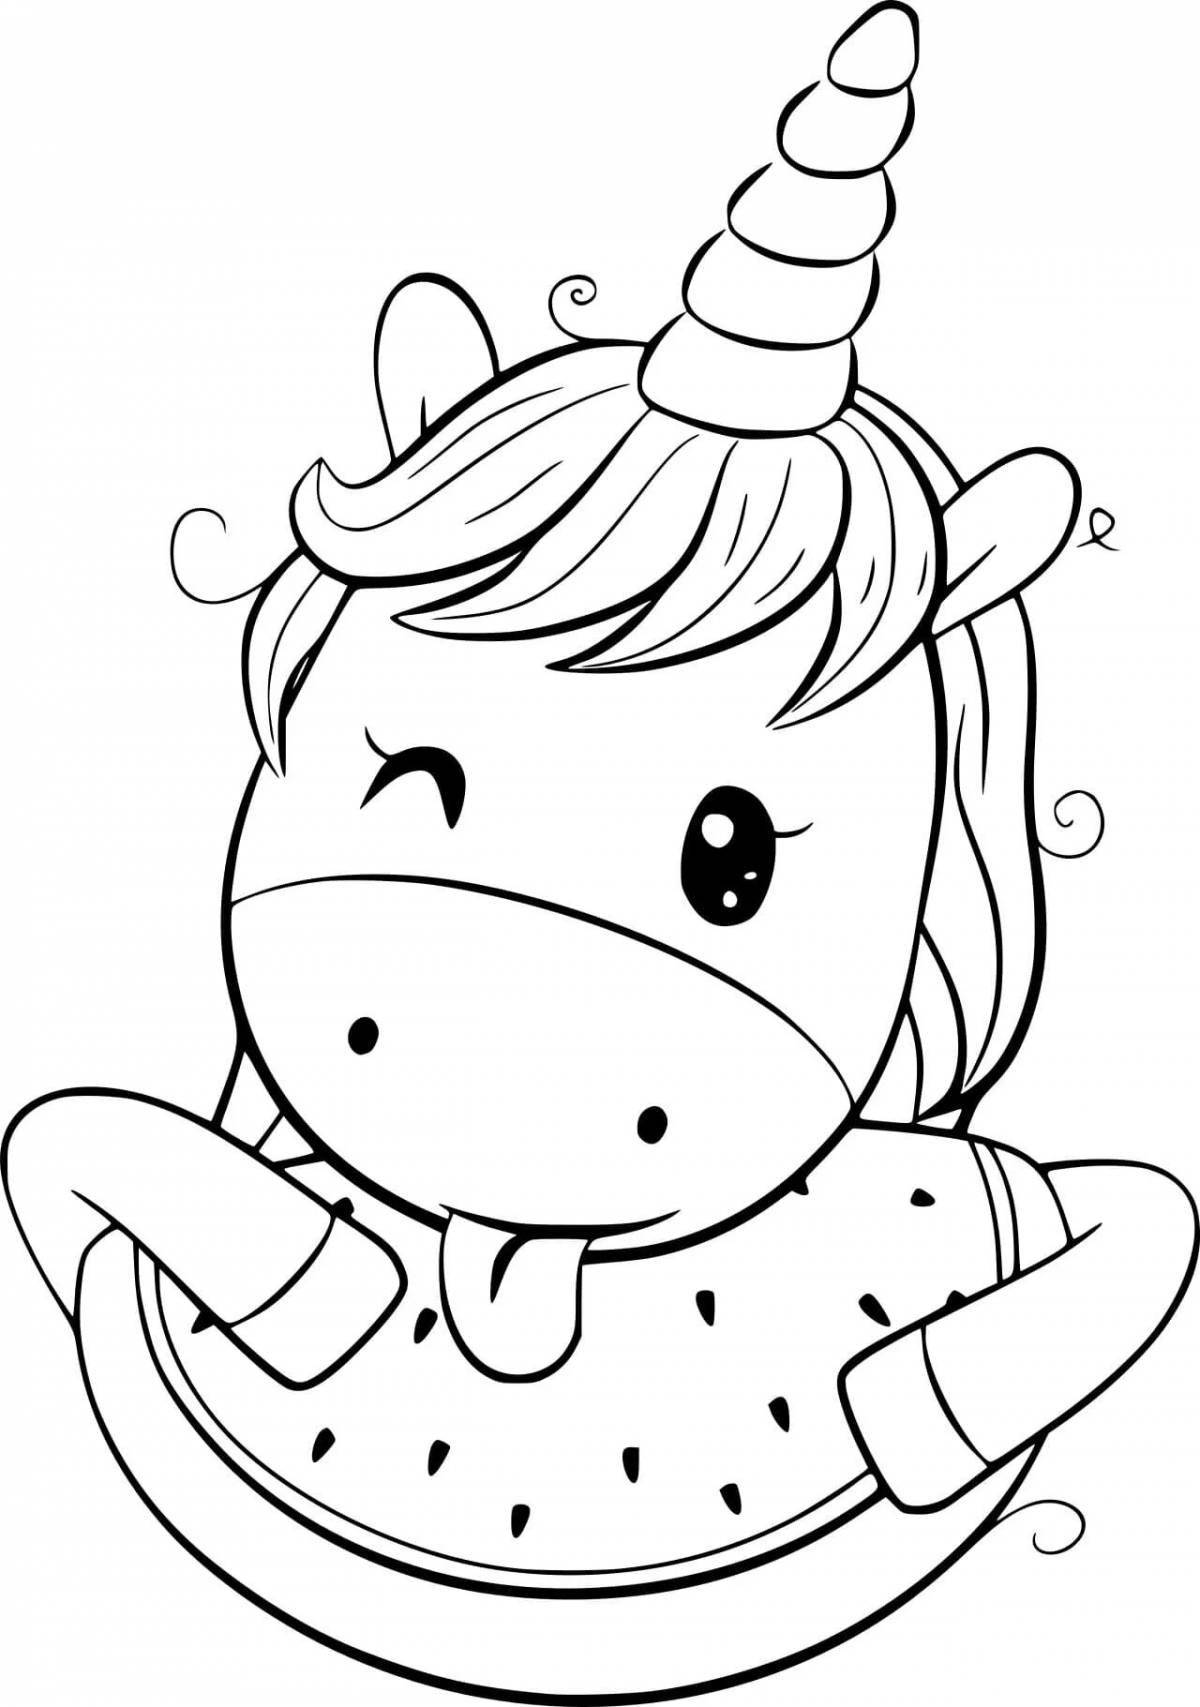 Joyful coloring cartoon unicorn